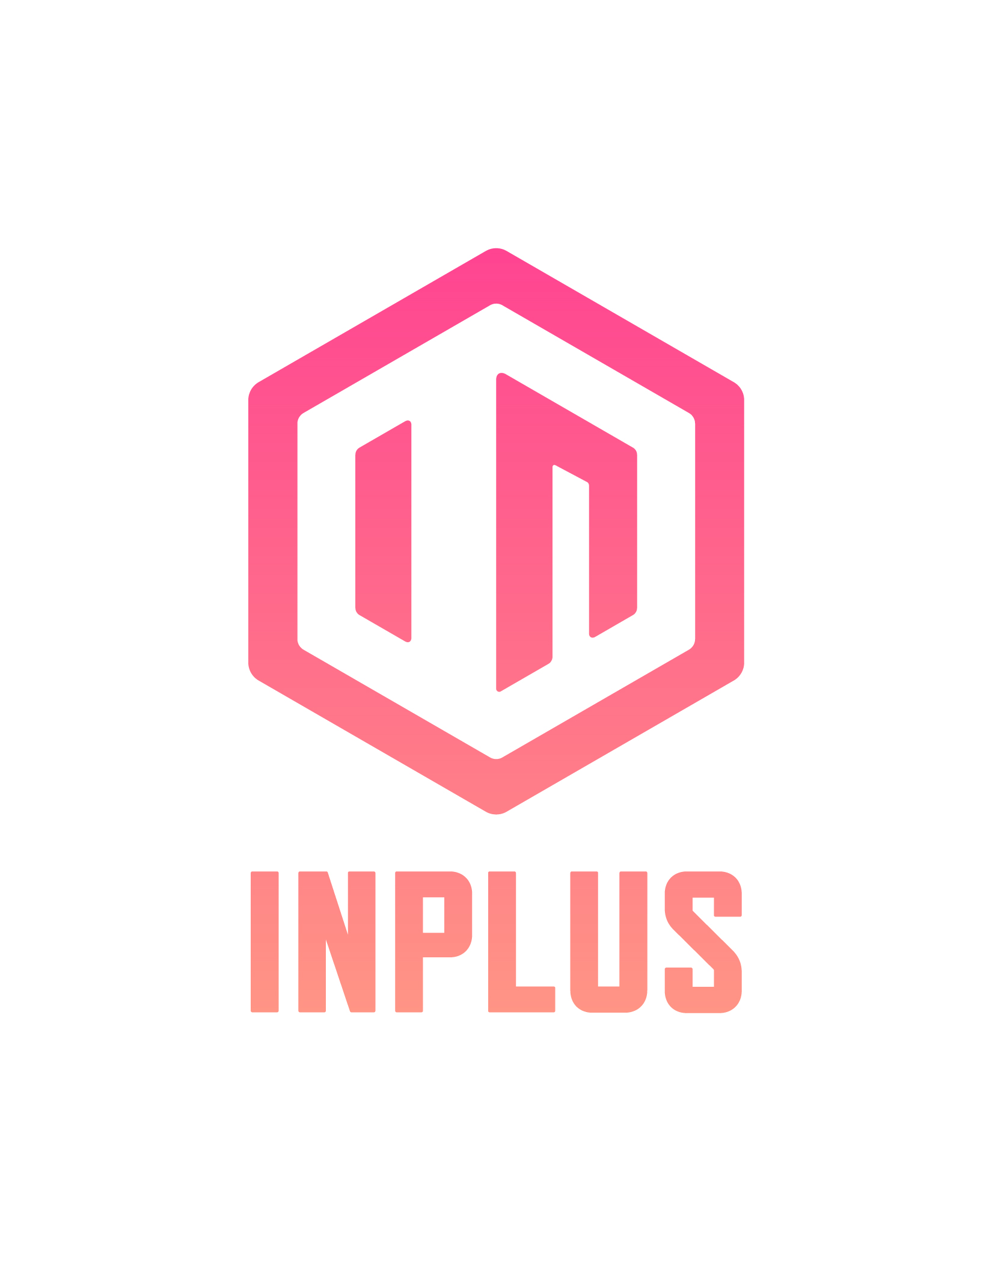 InPlus_portrait-pink.jpg